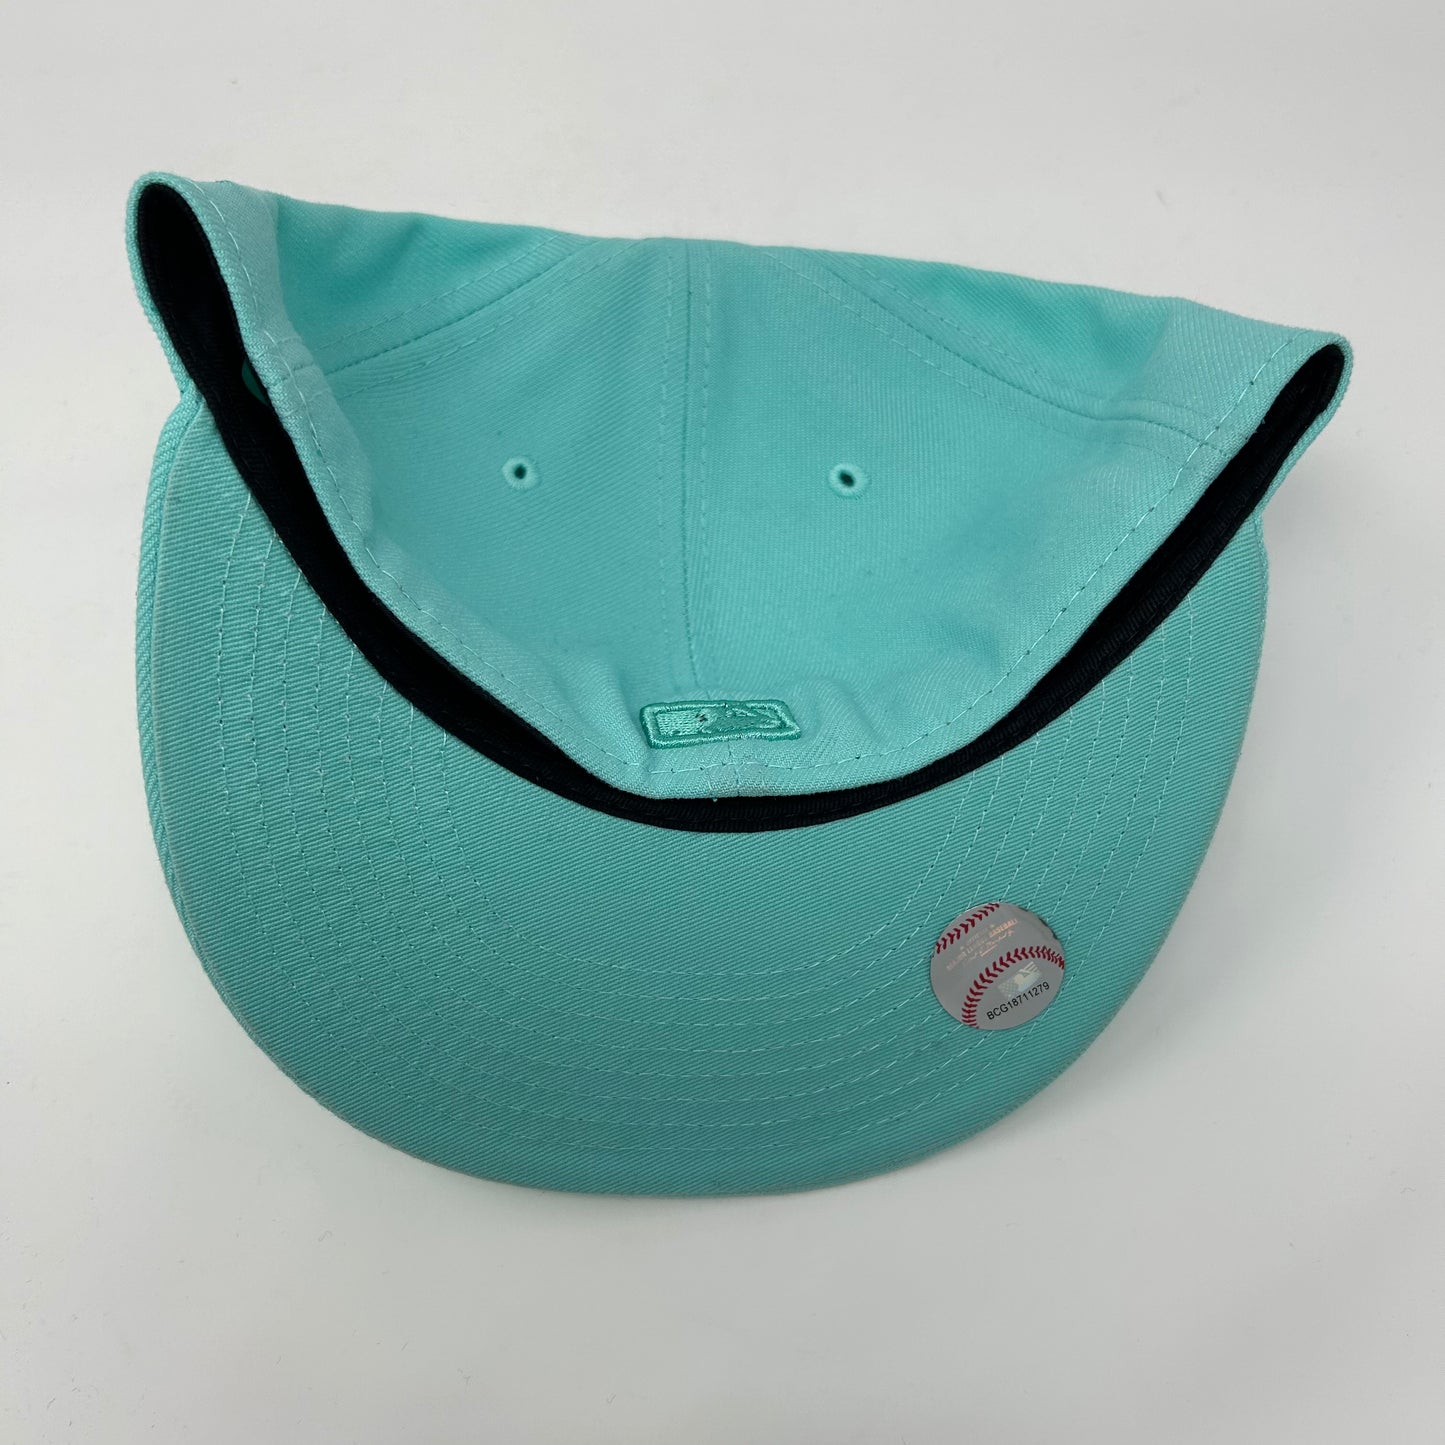 Houston Astros “Teal” Hat